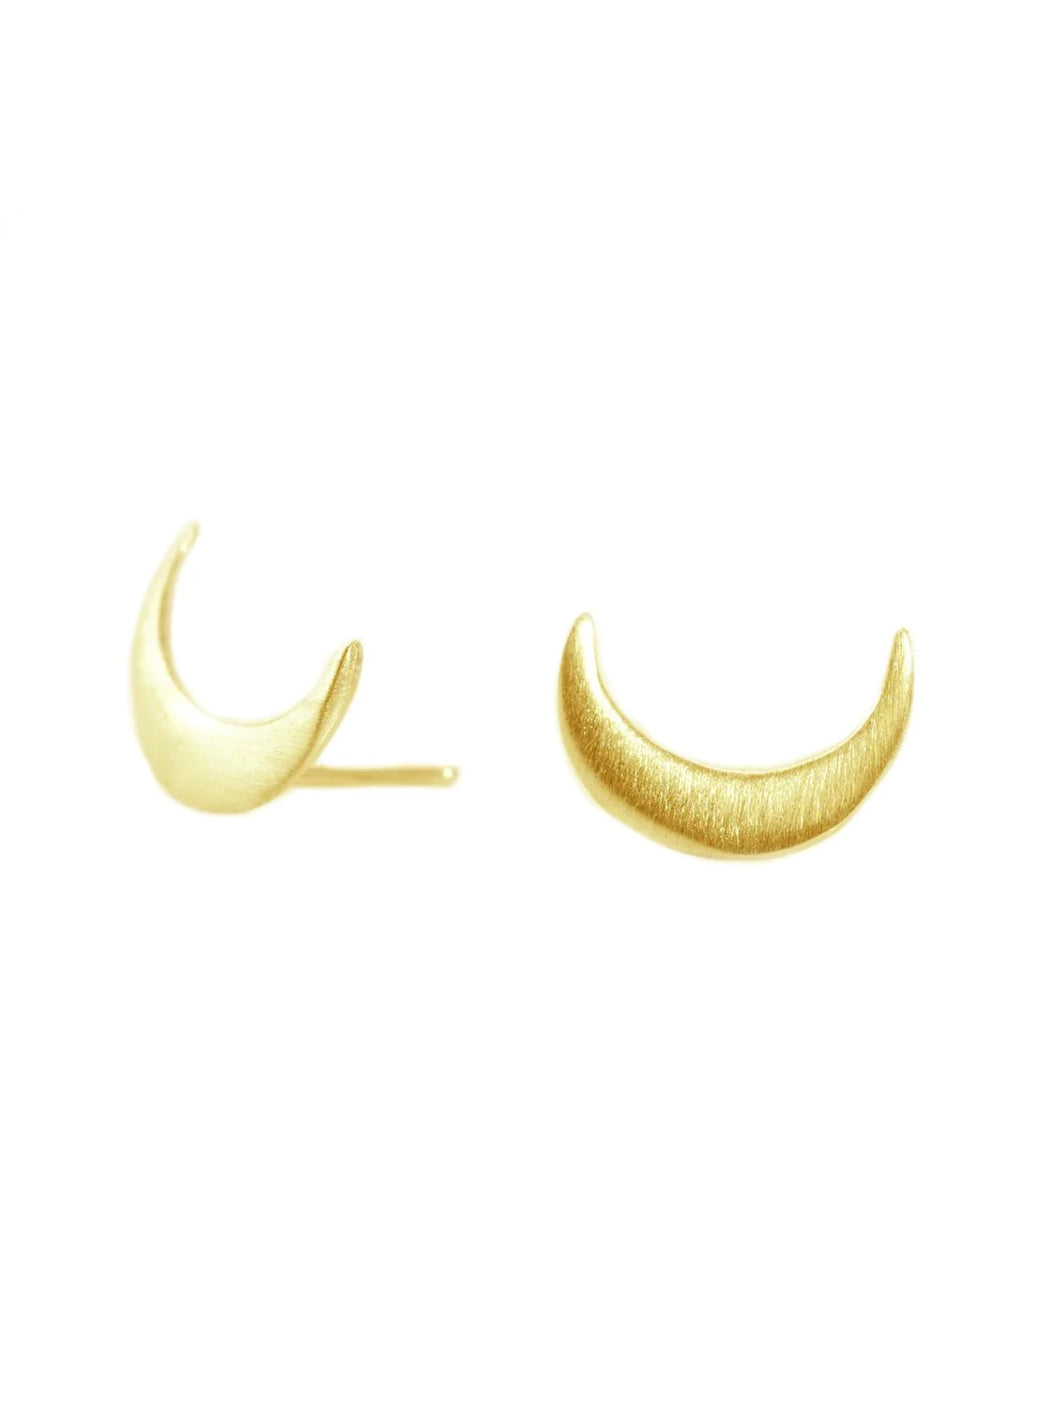 Vermeil Crescent Moon Post Earrings